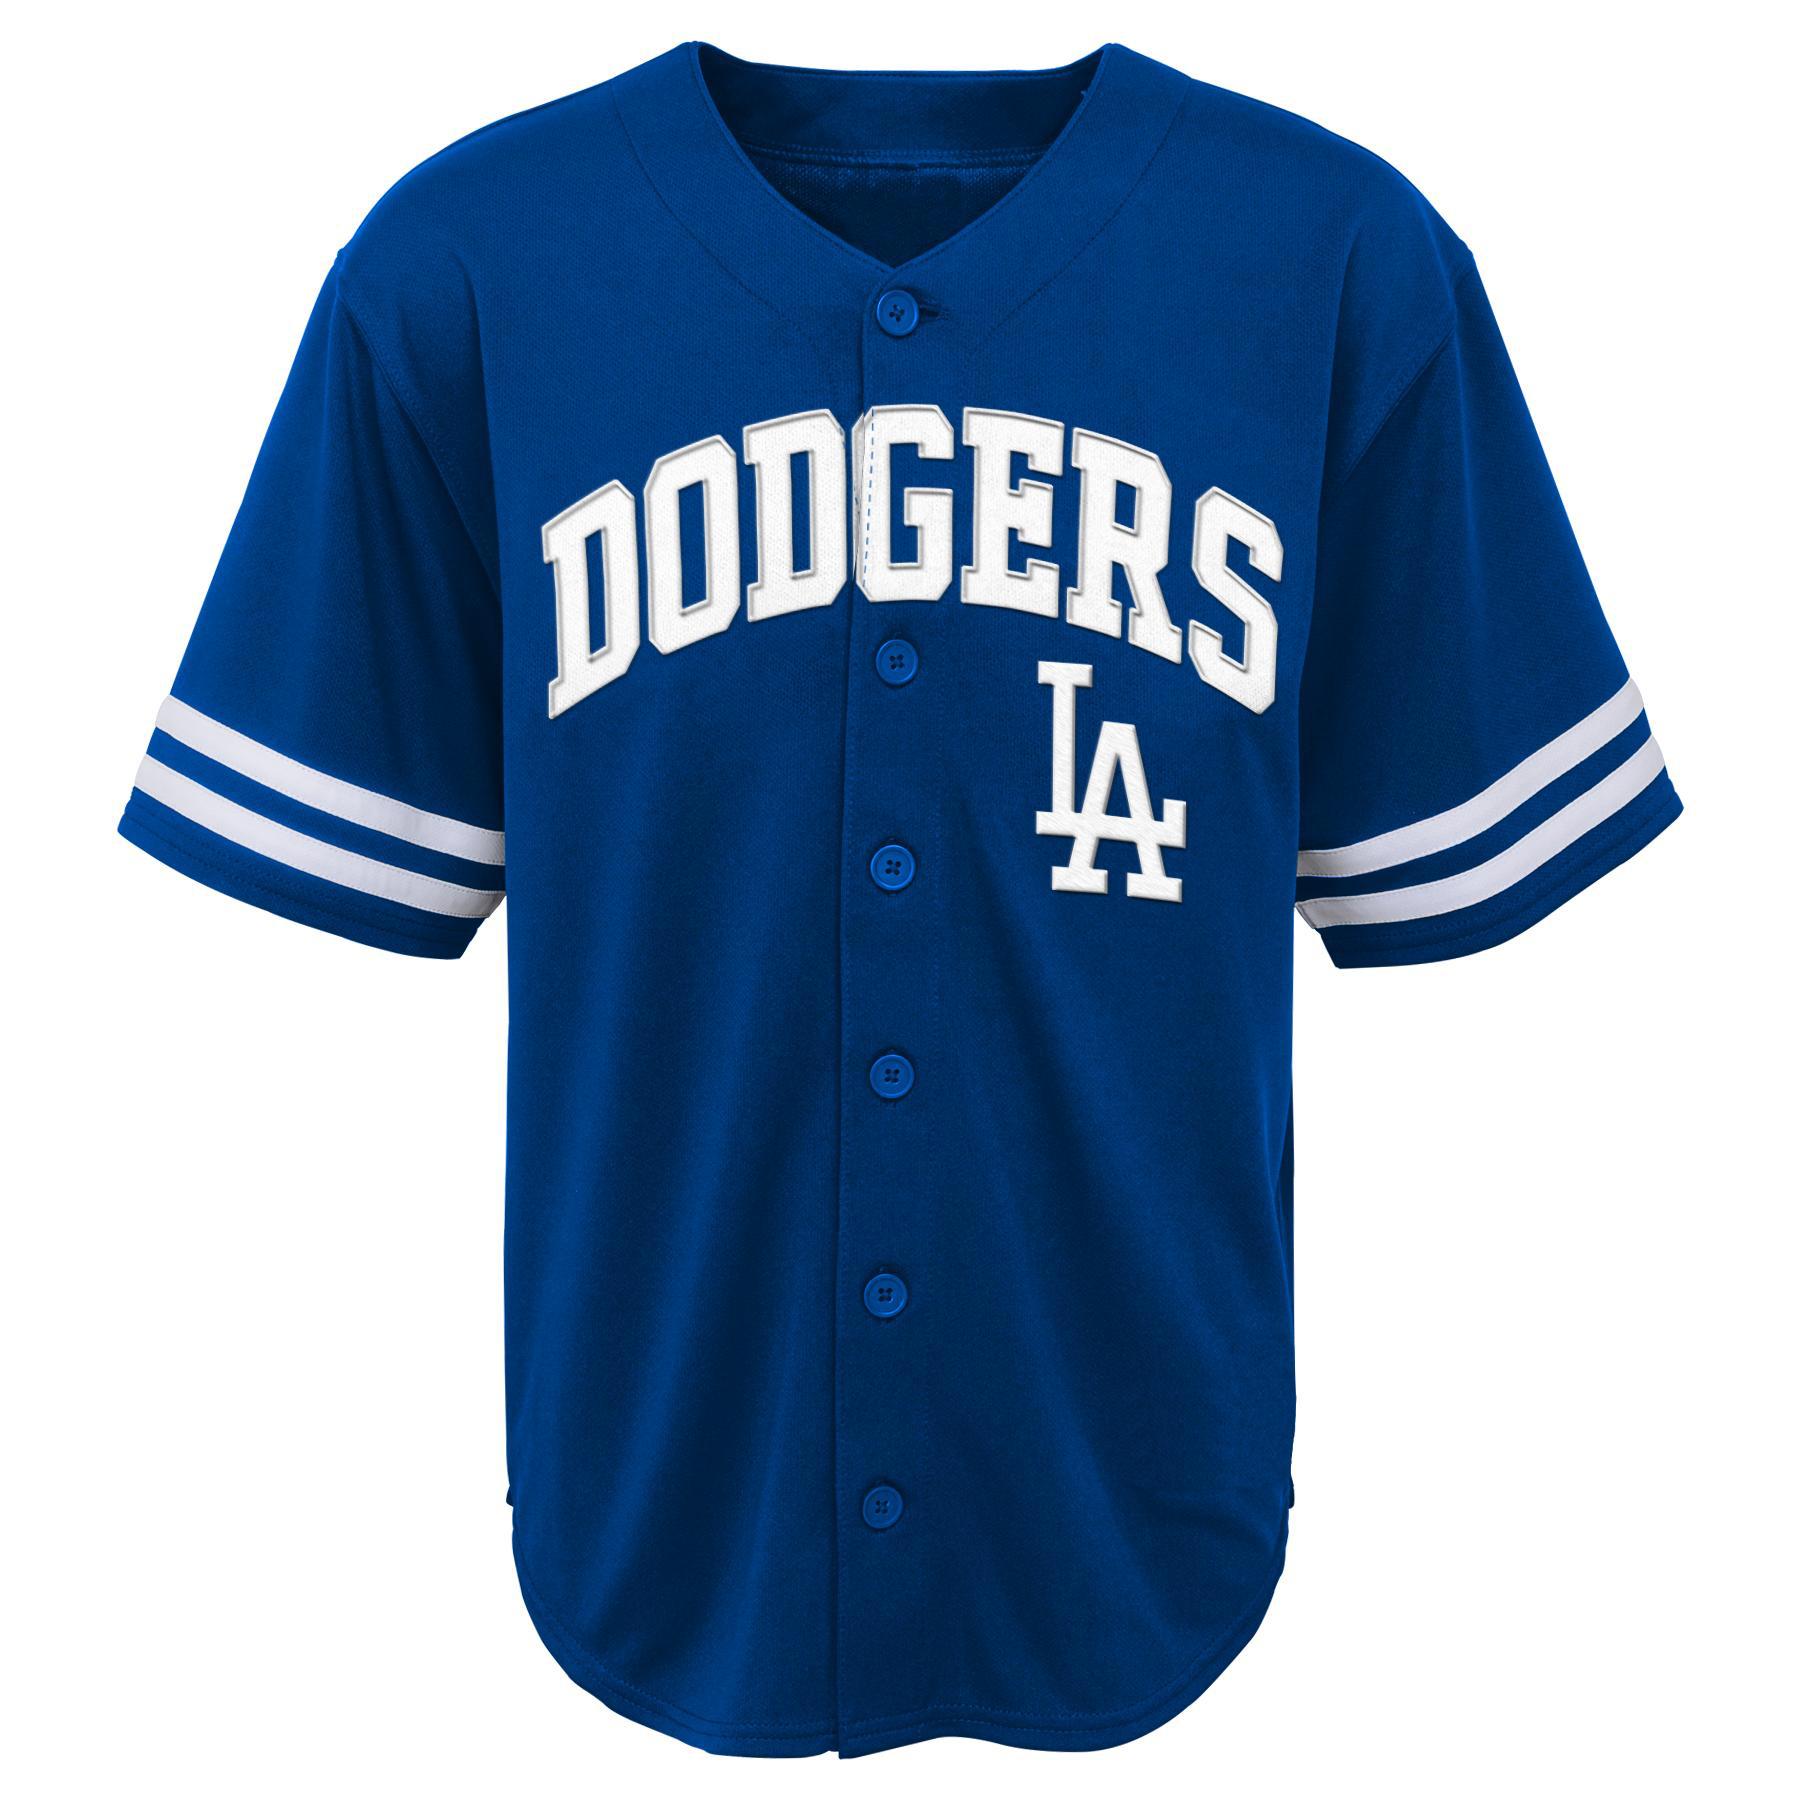 MLB Boys' Jersey - Los Angeles Dodgers